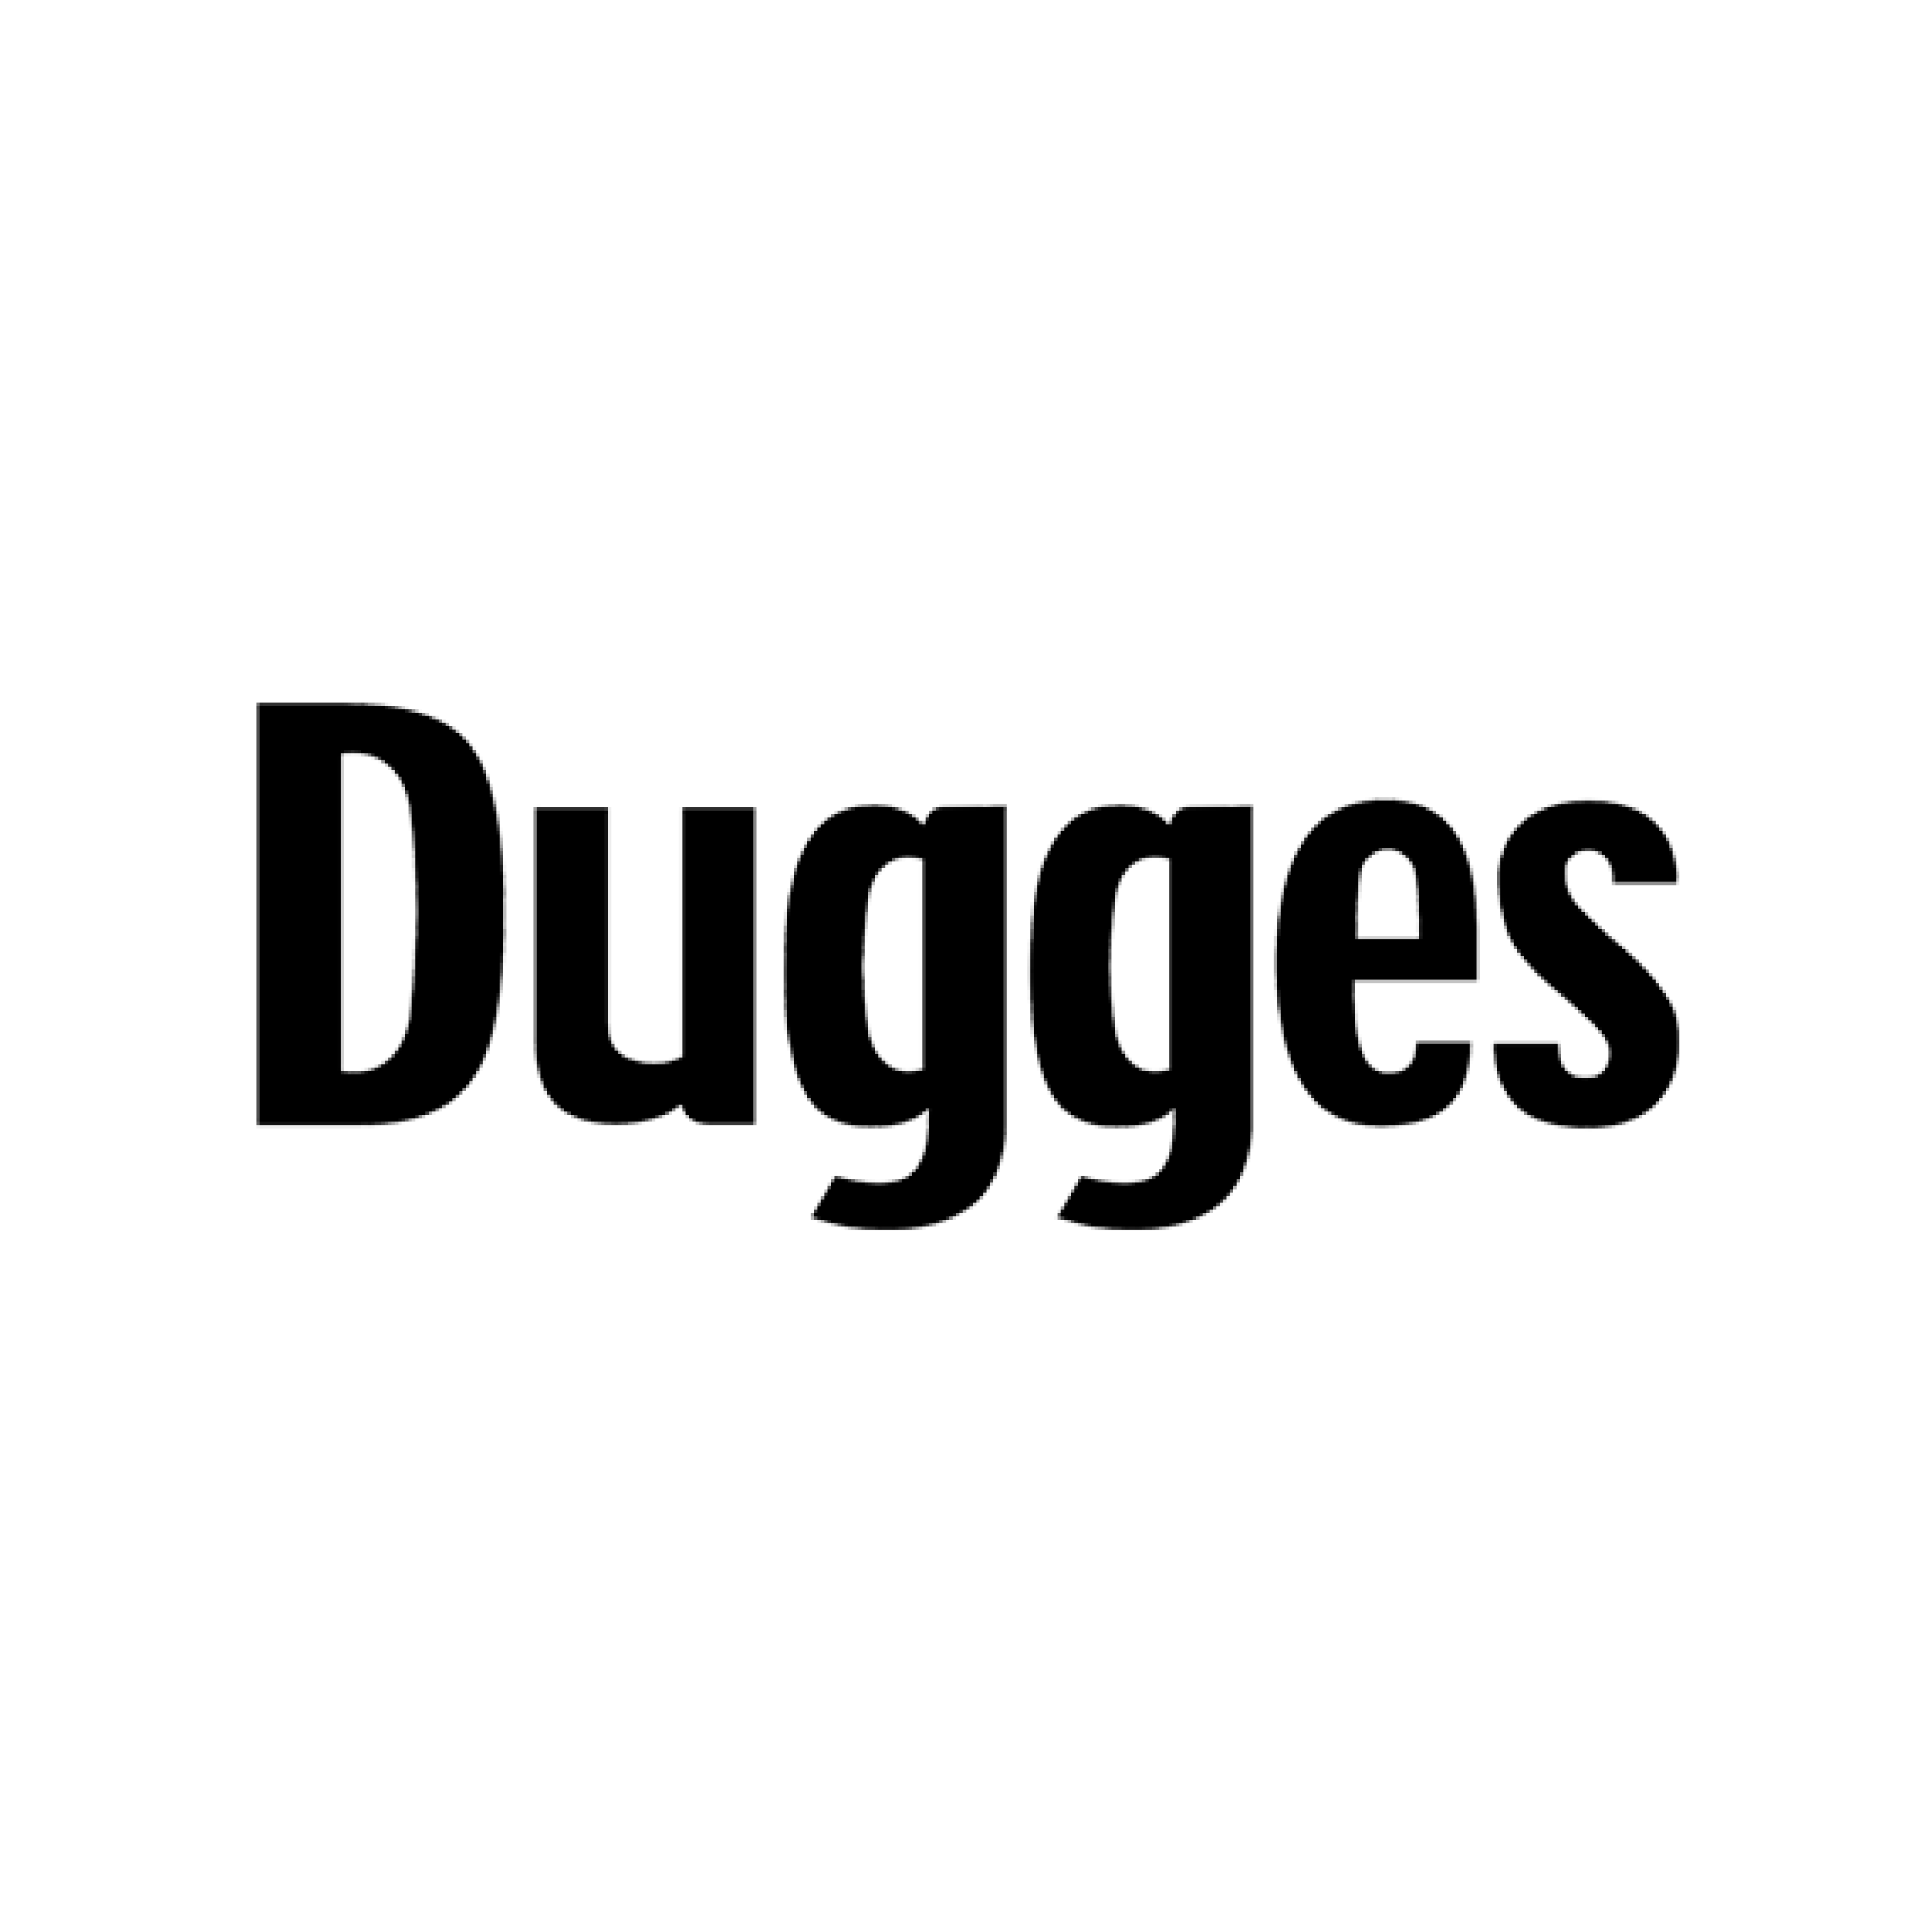 Dugges